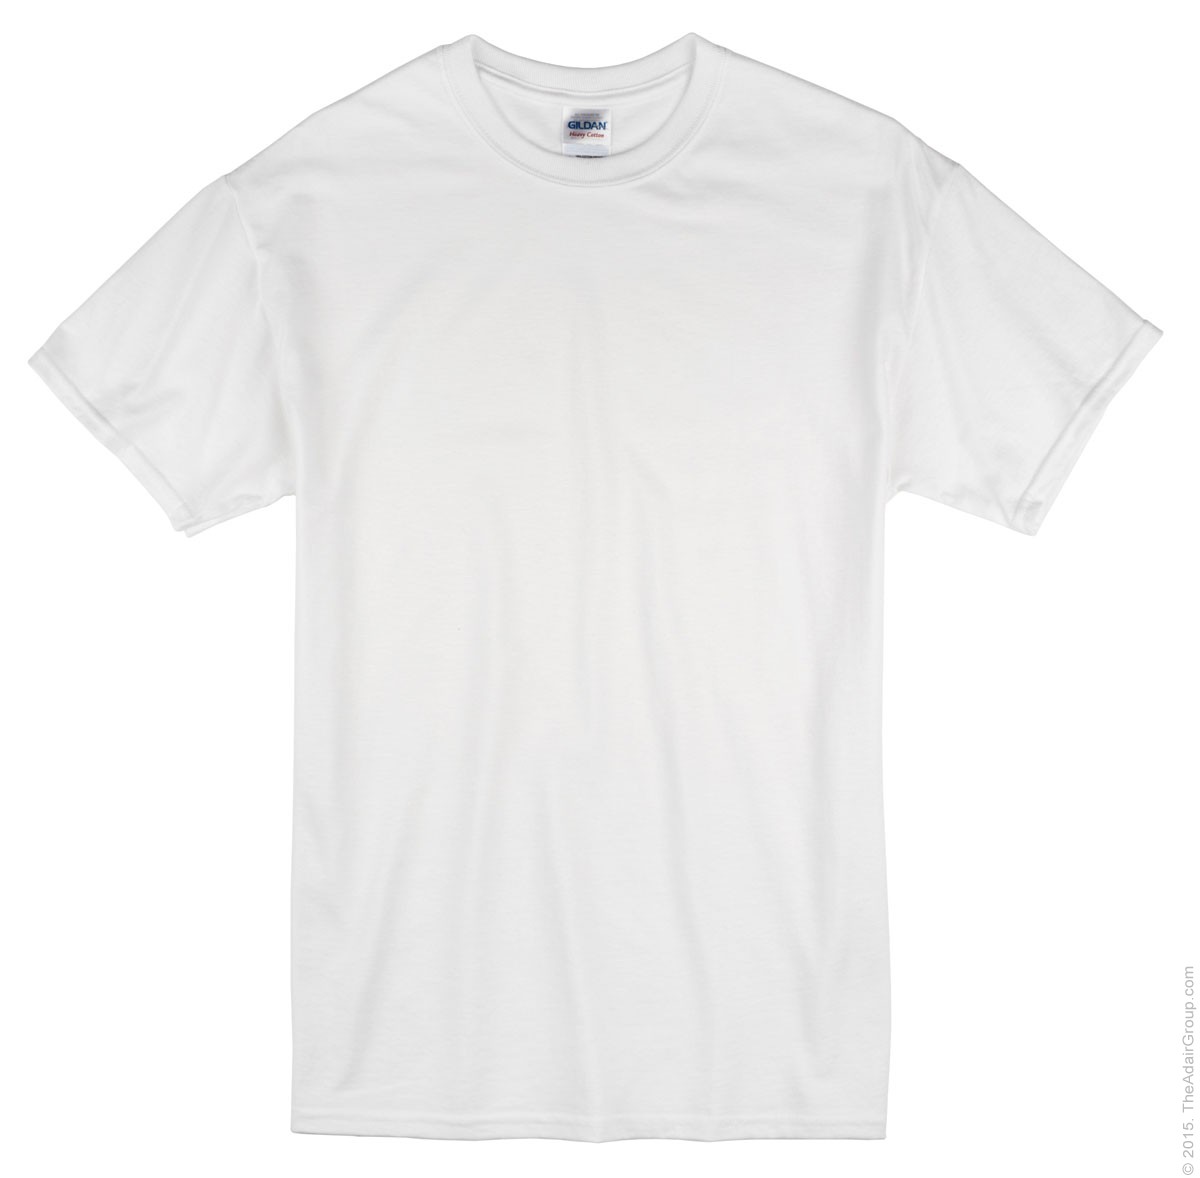 20 Gildan White Adult Long Sleeve T-Shirts Wholesale Bulk Blank